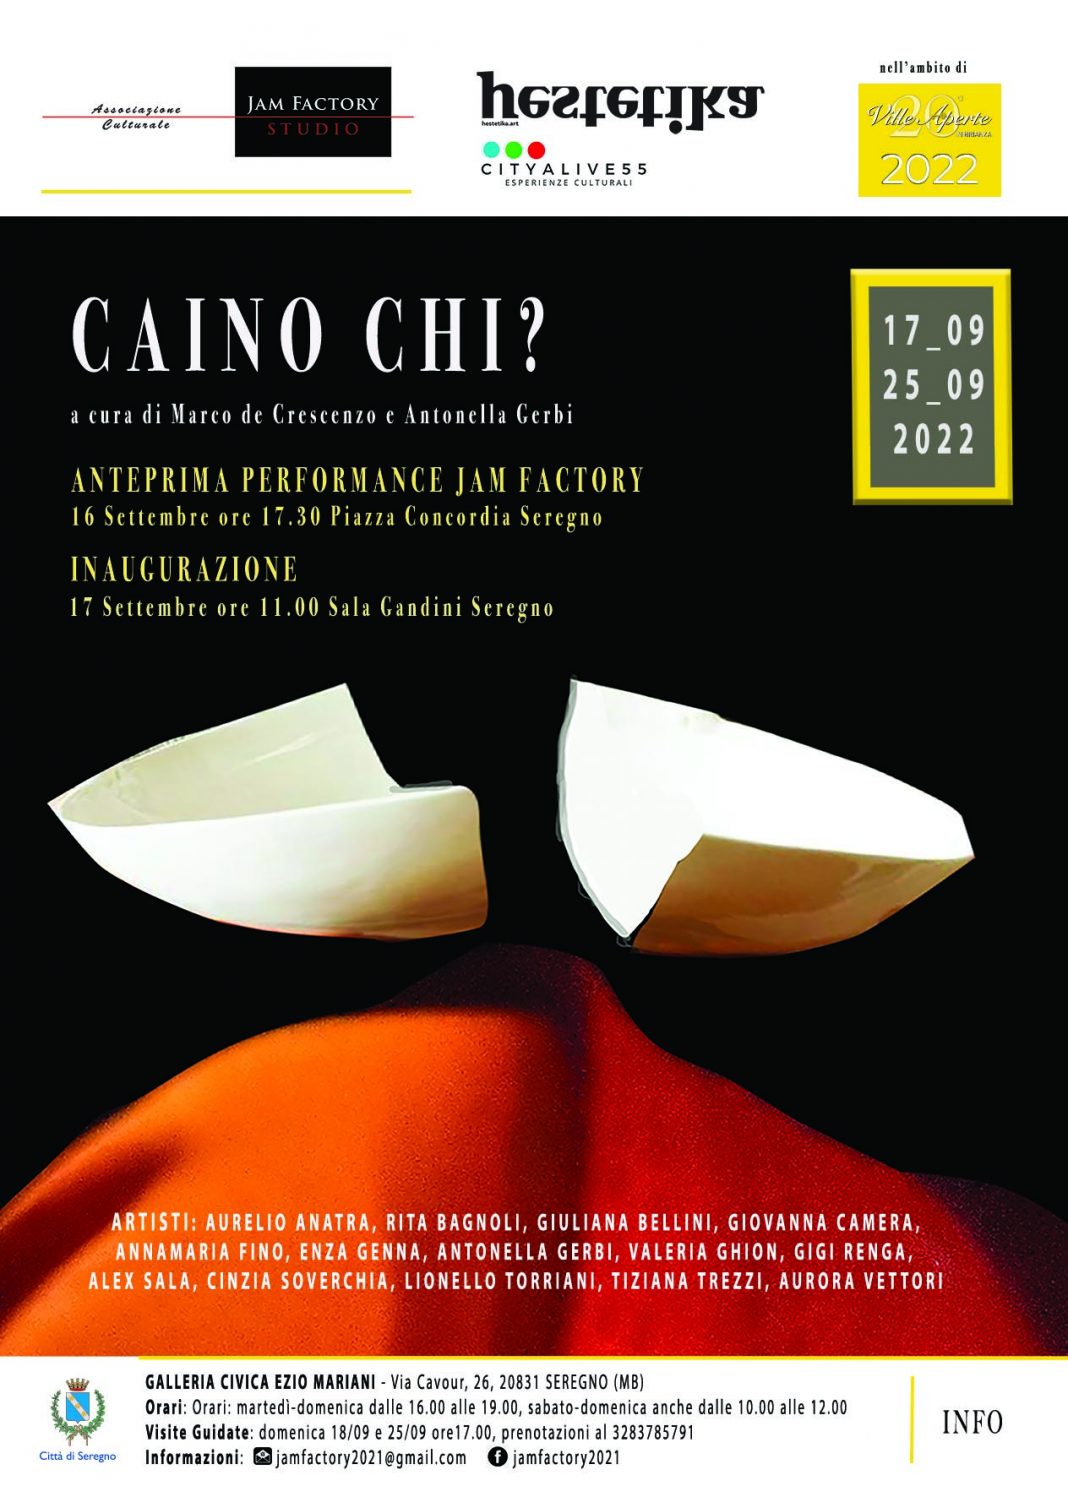 CAINO CHI?https://www.exibart.com/repository/media/formidable/11/img/d1a/Cartoline-Caino-Chi-copia-1068x1497.jpg